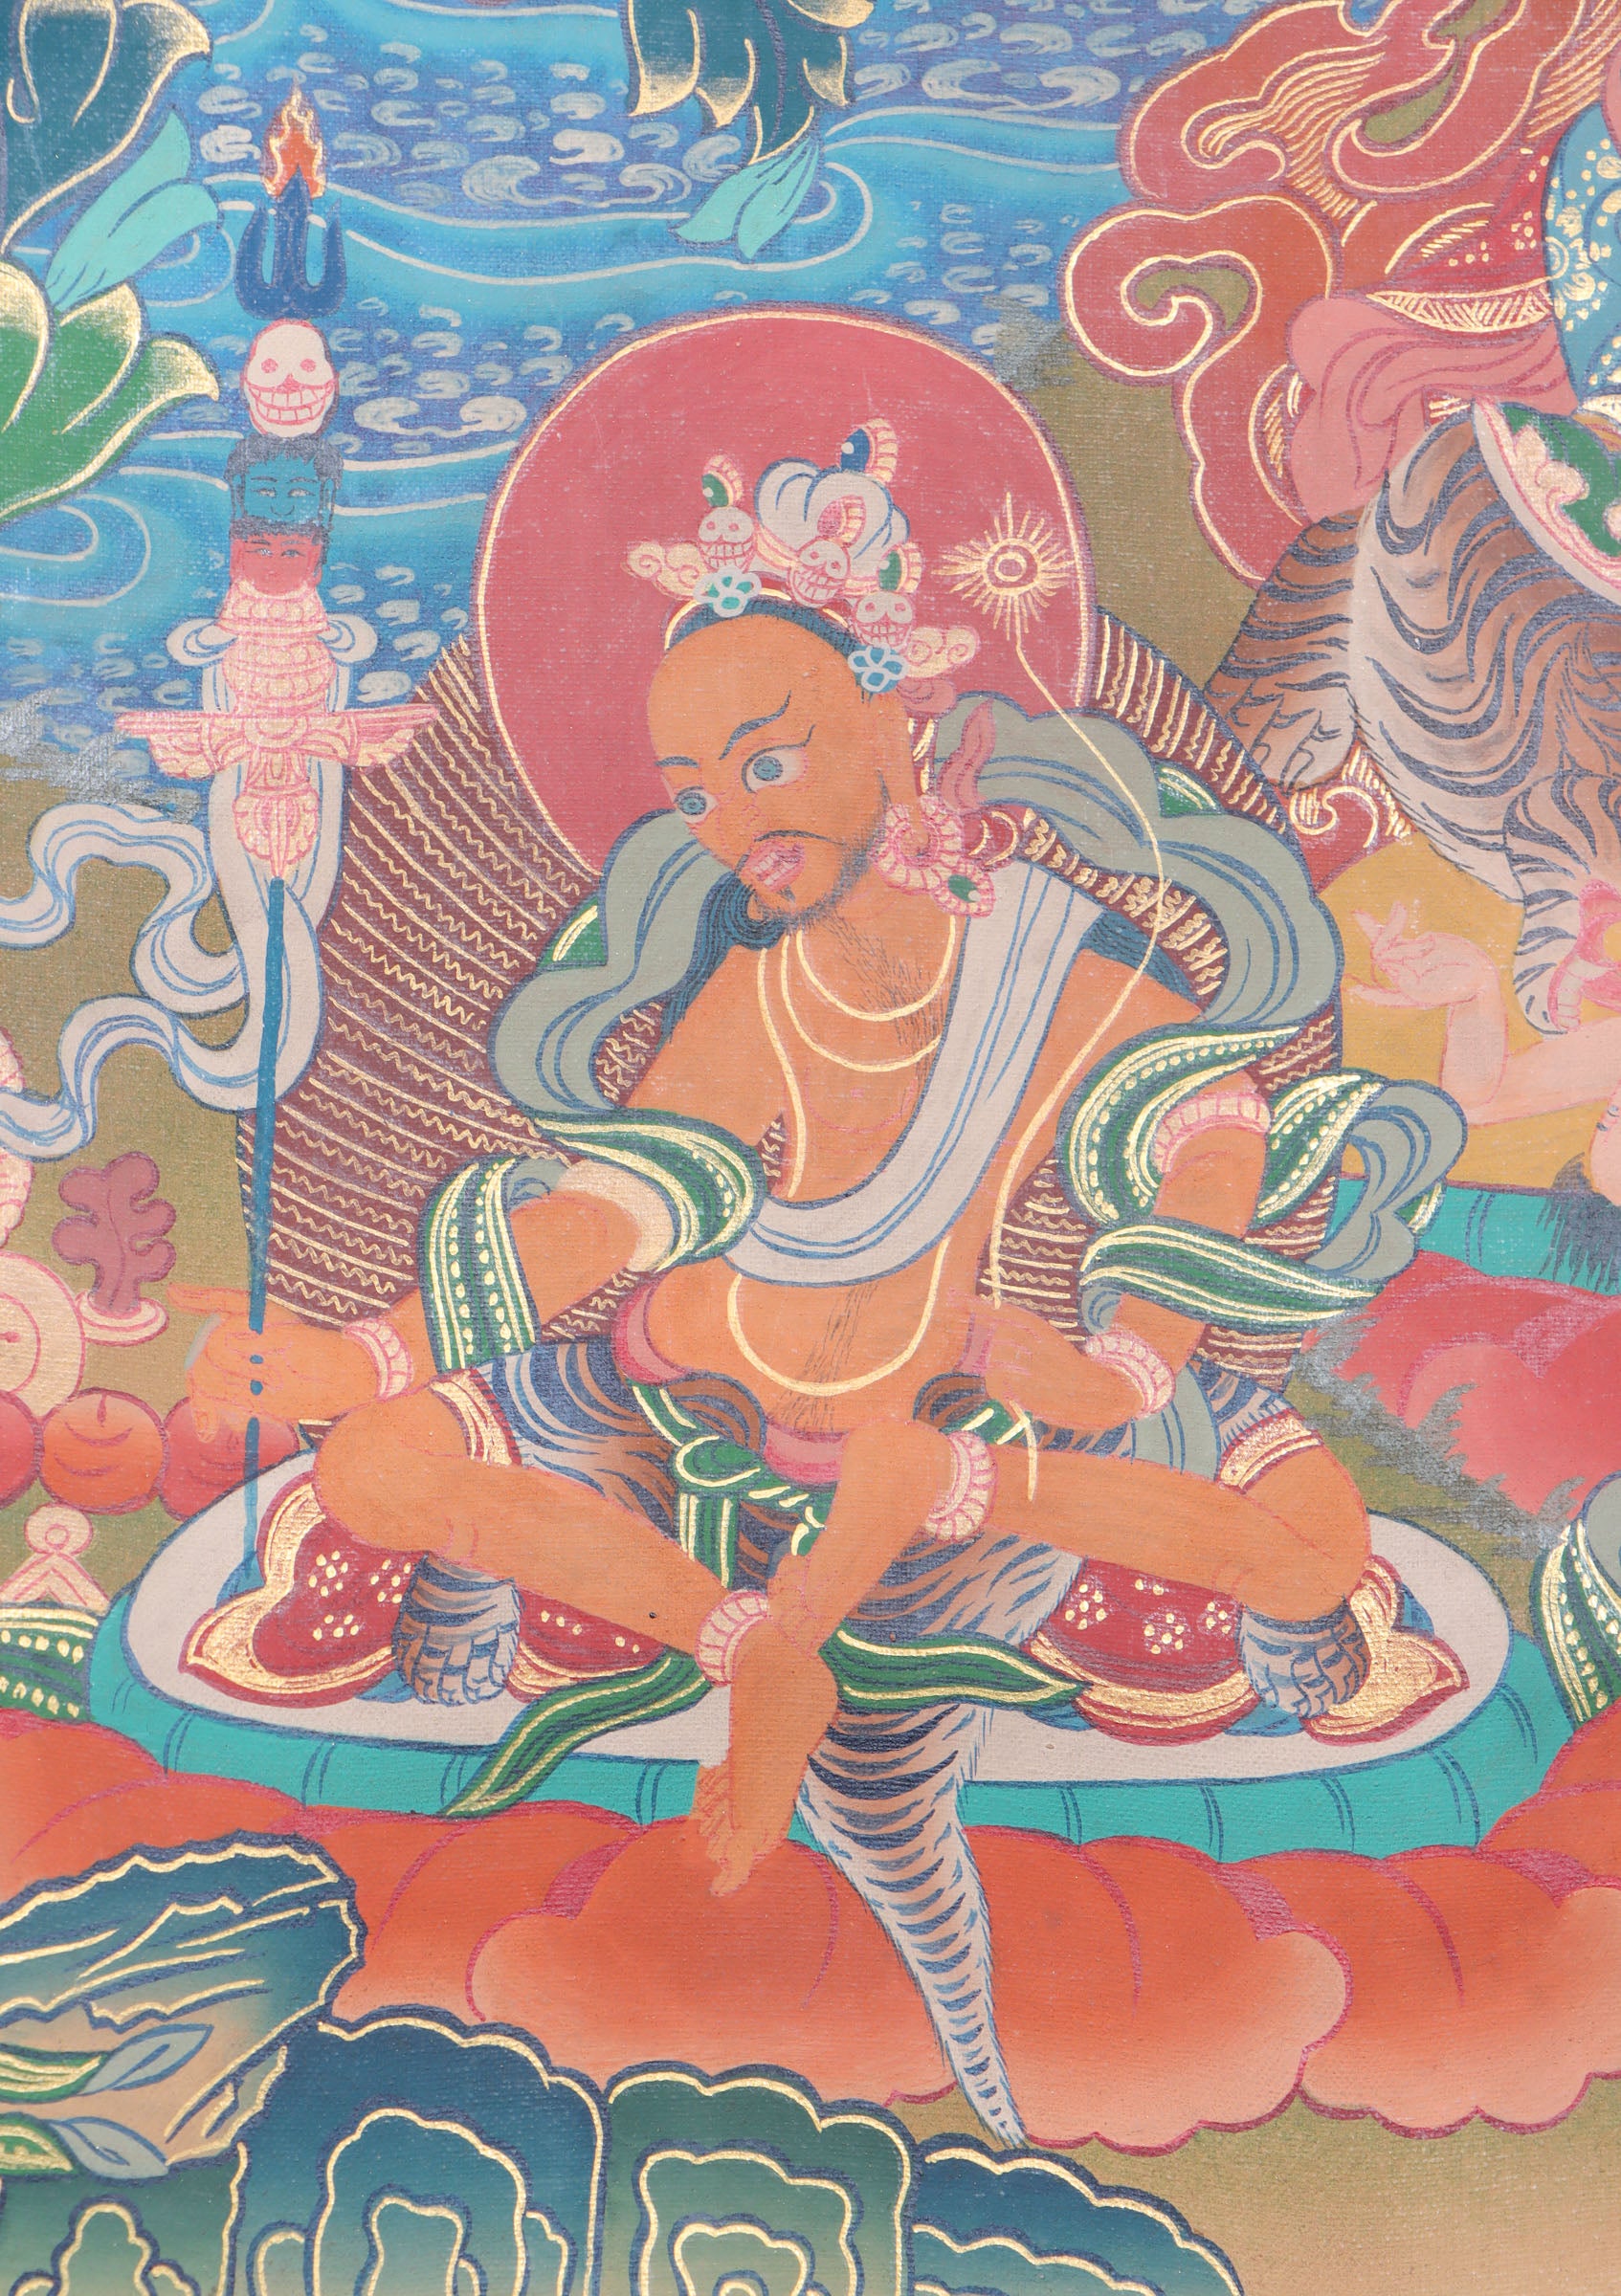 Guru Rinpoche Thangka for spiritual devotion, contemplation, and motivation.